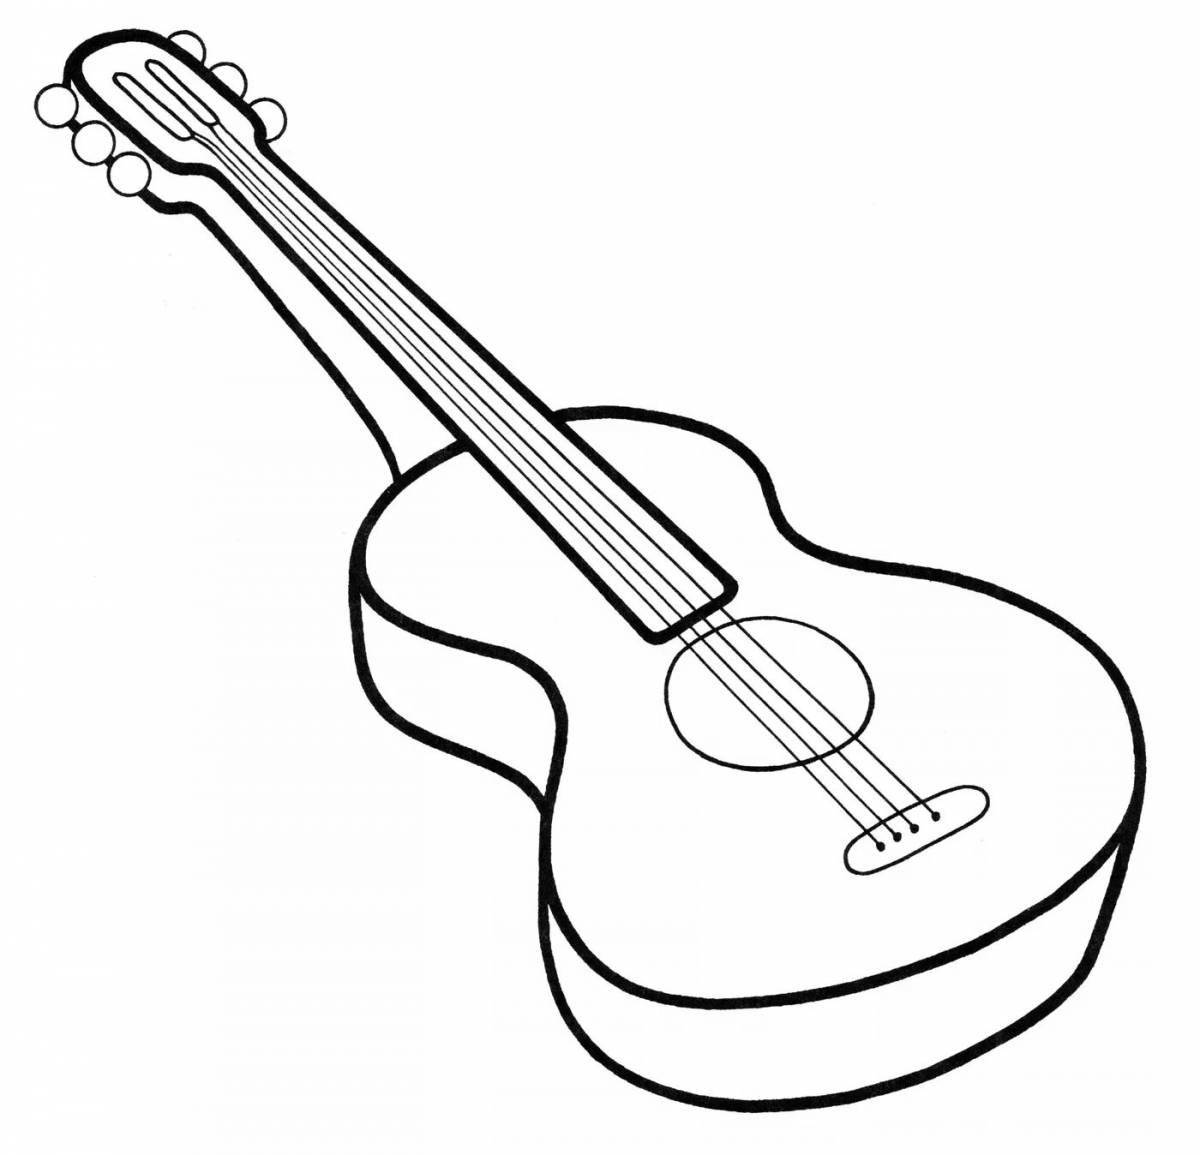 Замысловатая страница раскраски гитары